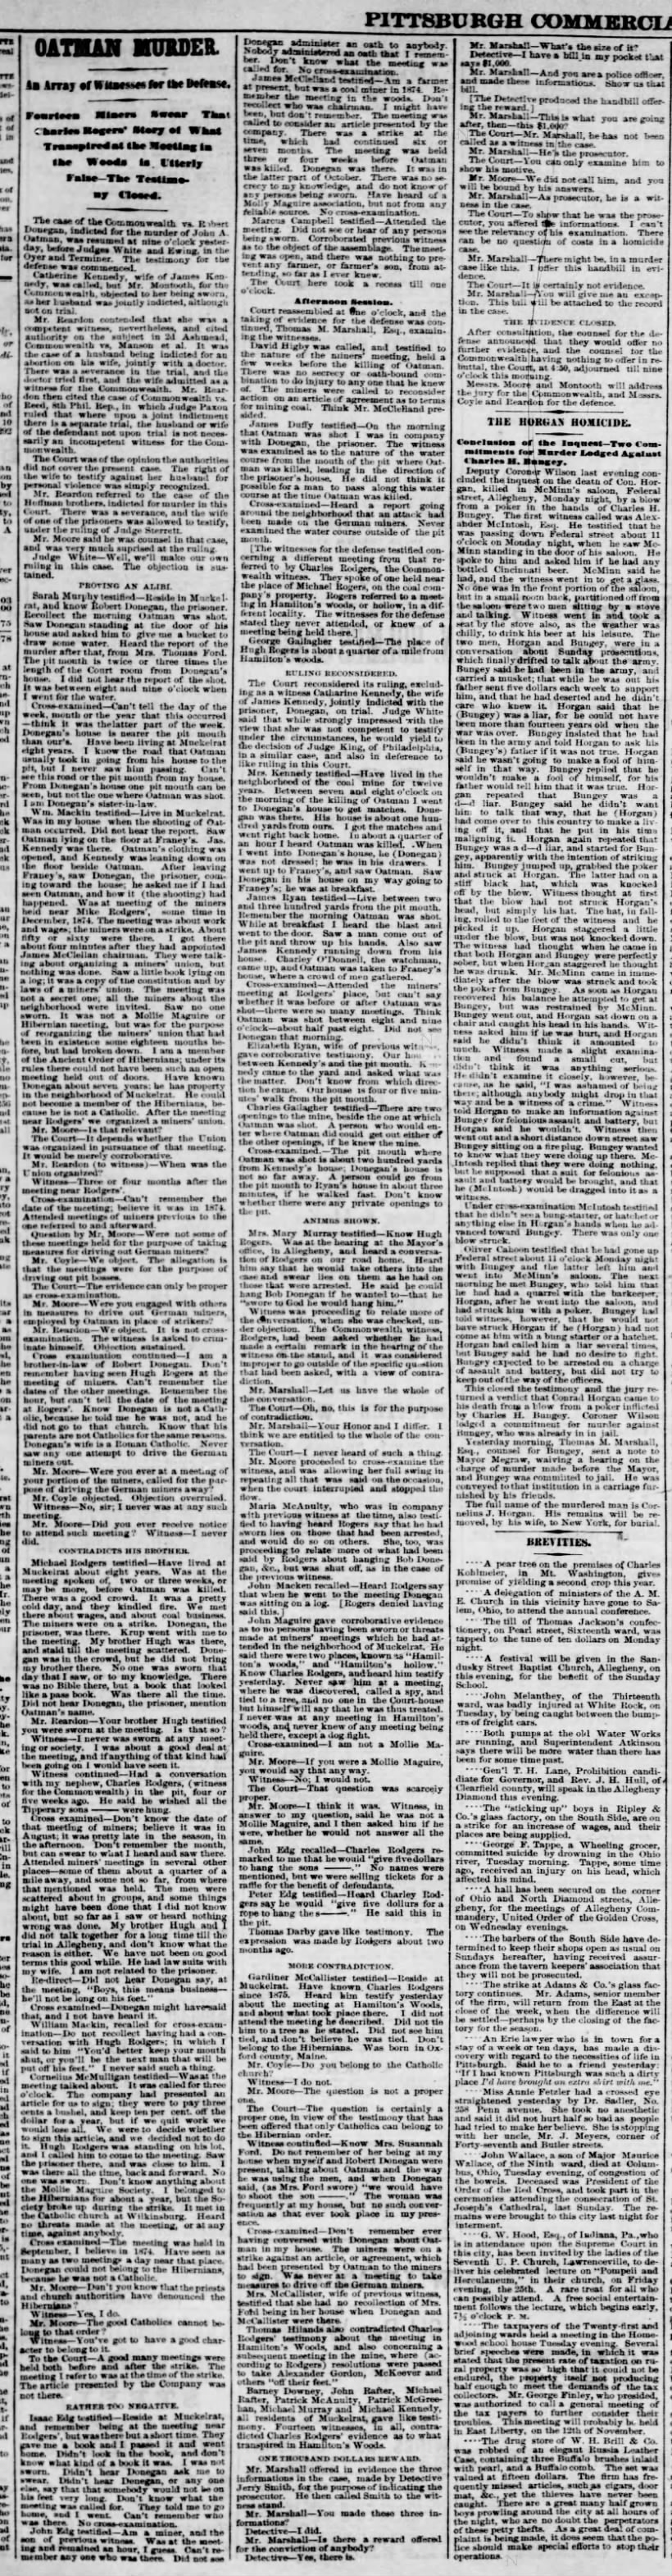 Oct 24, 1878 Post-Gazette